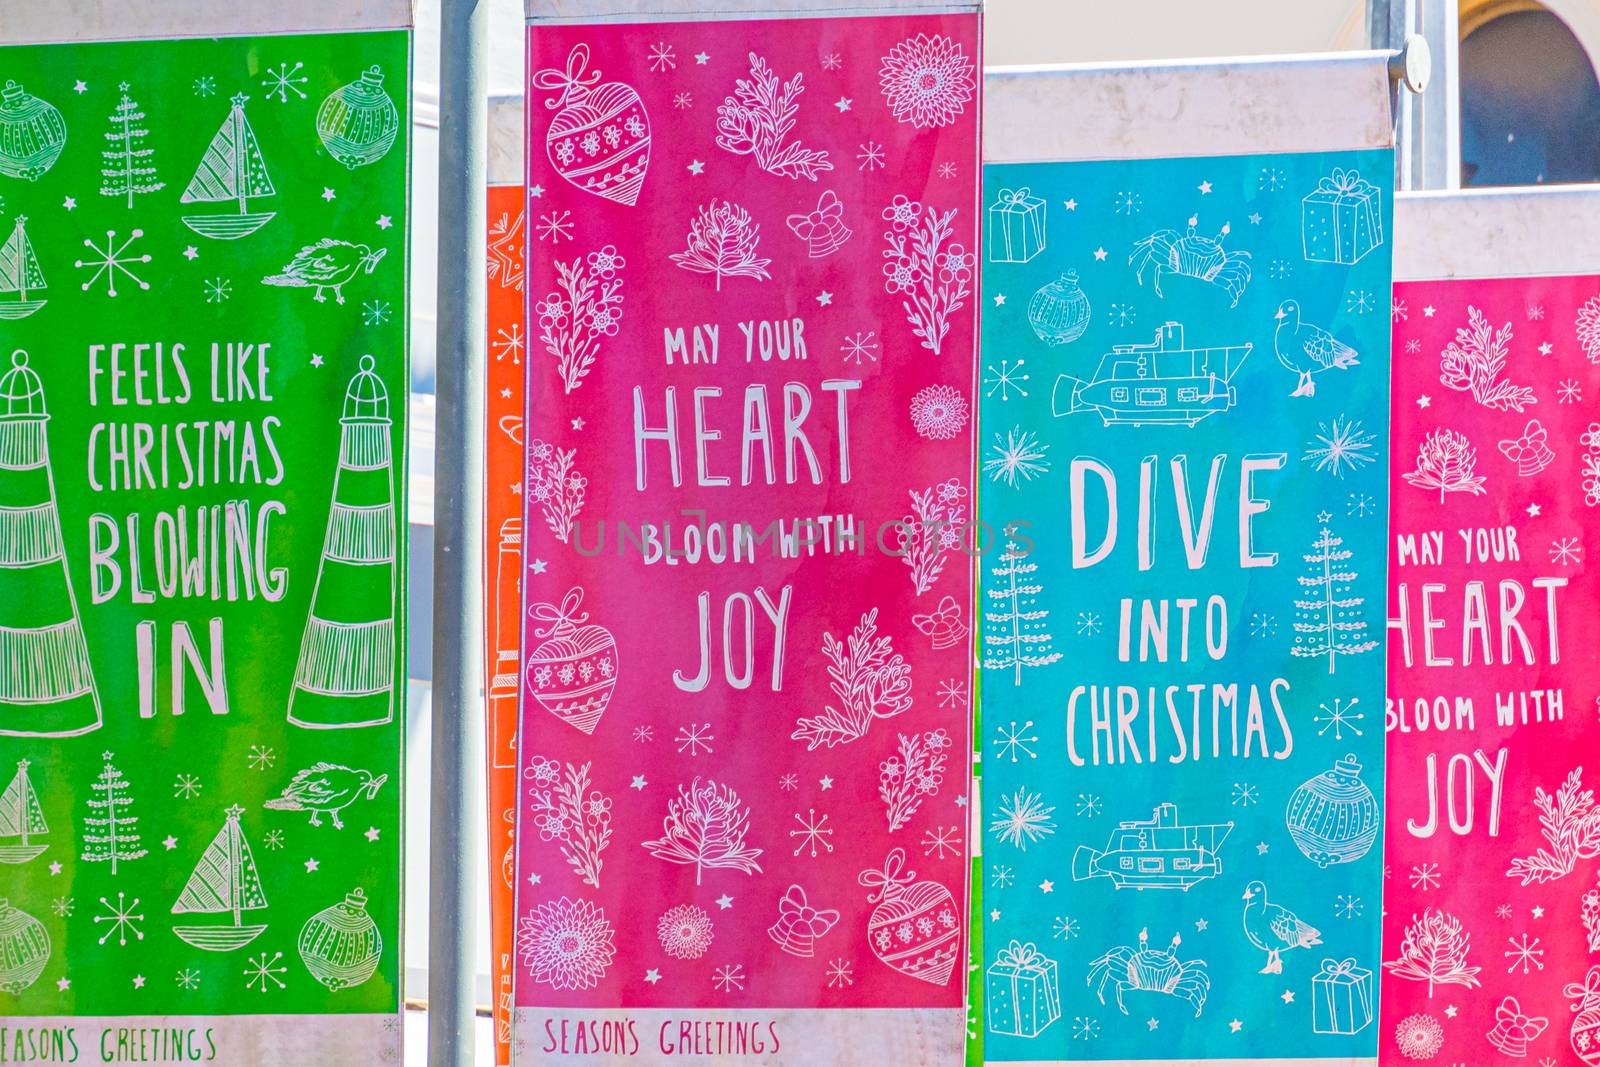 Christmas slogans in Geraldton Australia during sunny summer